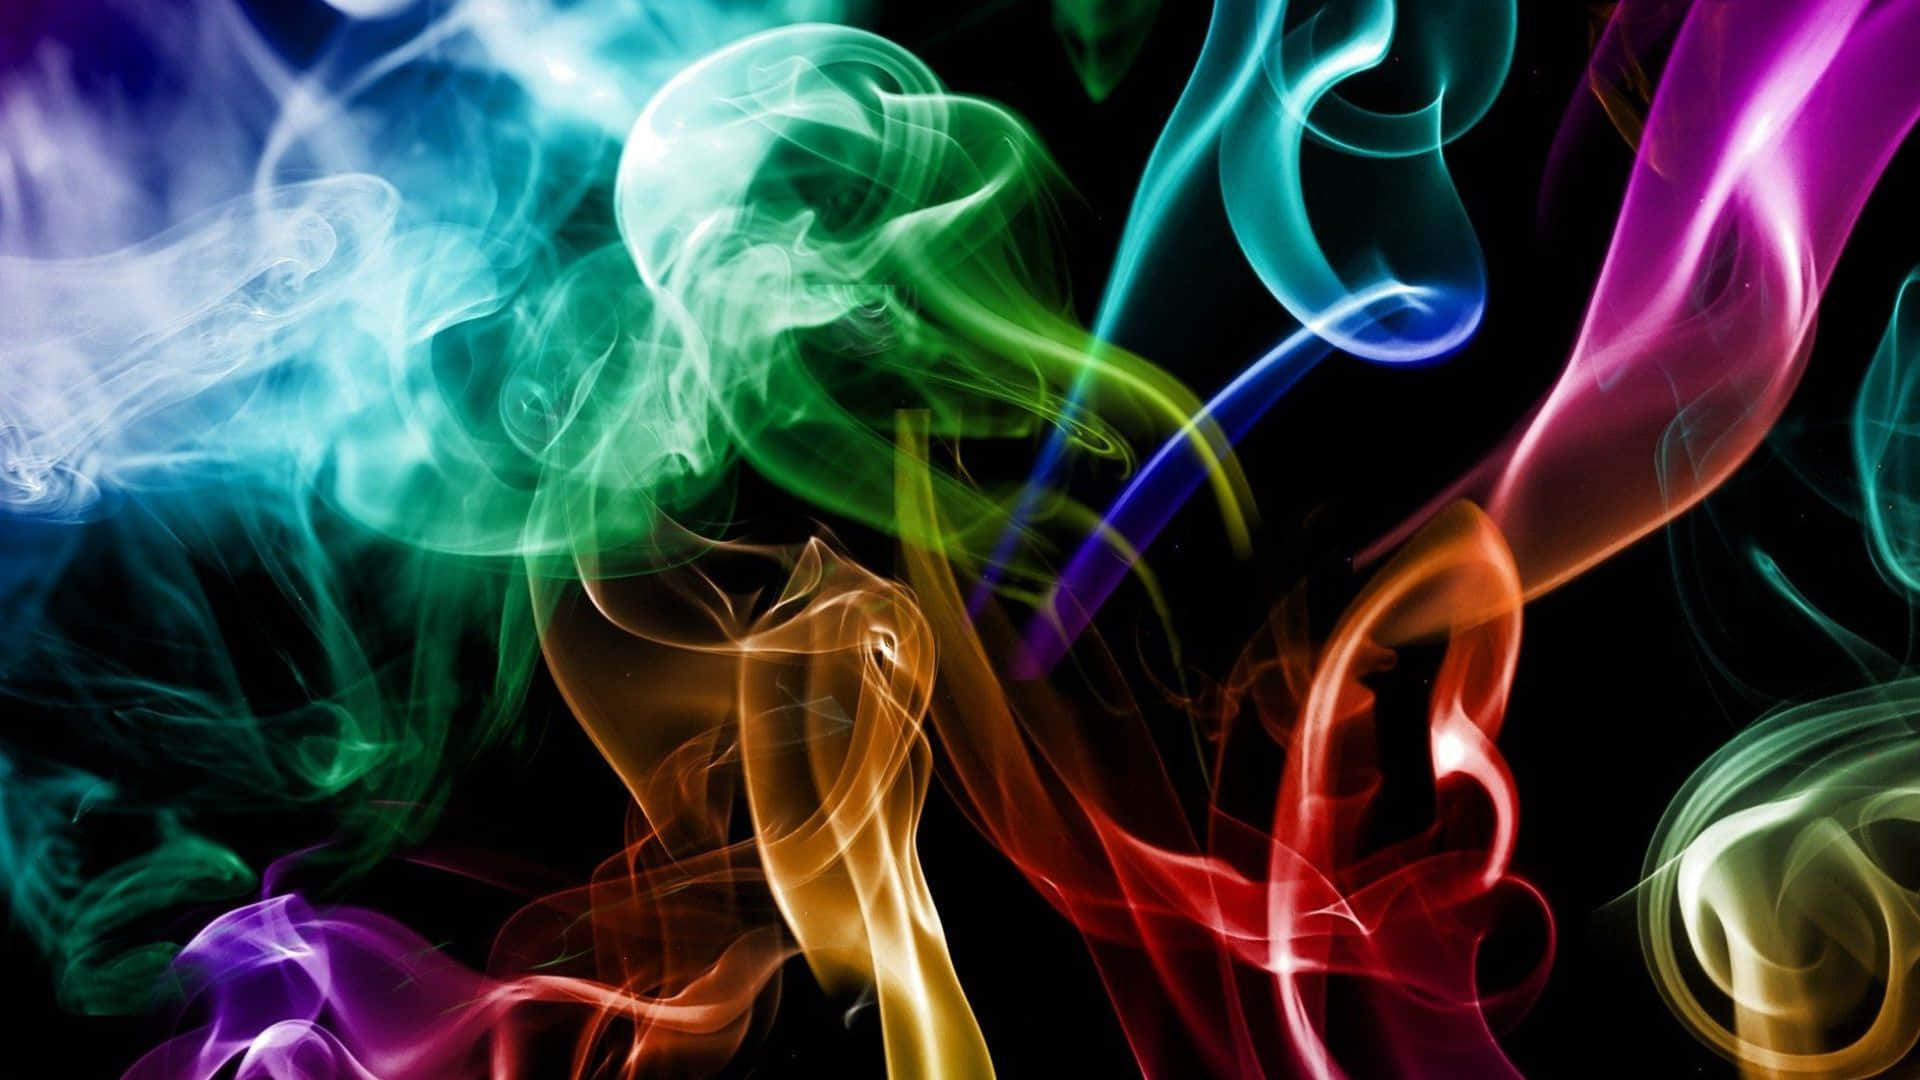 Colorful Smoke On A Black Background